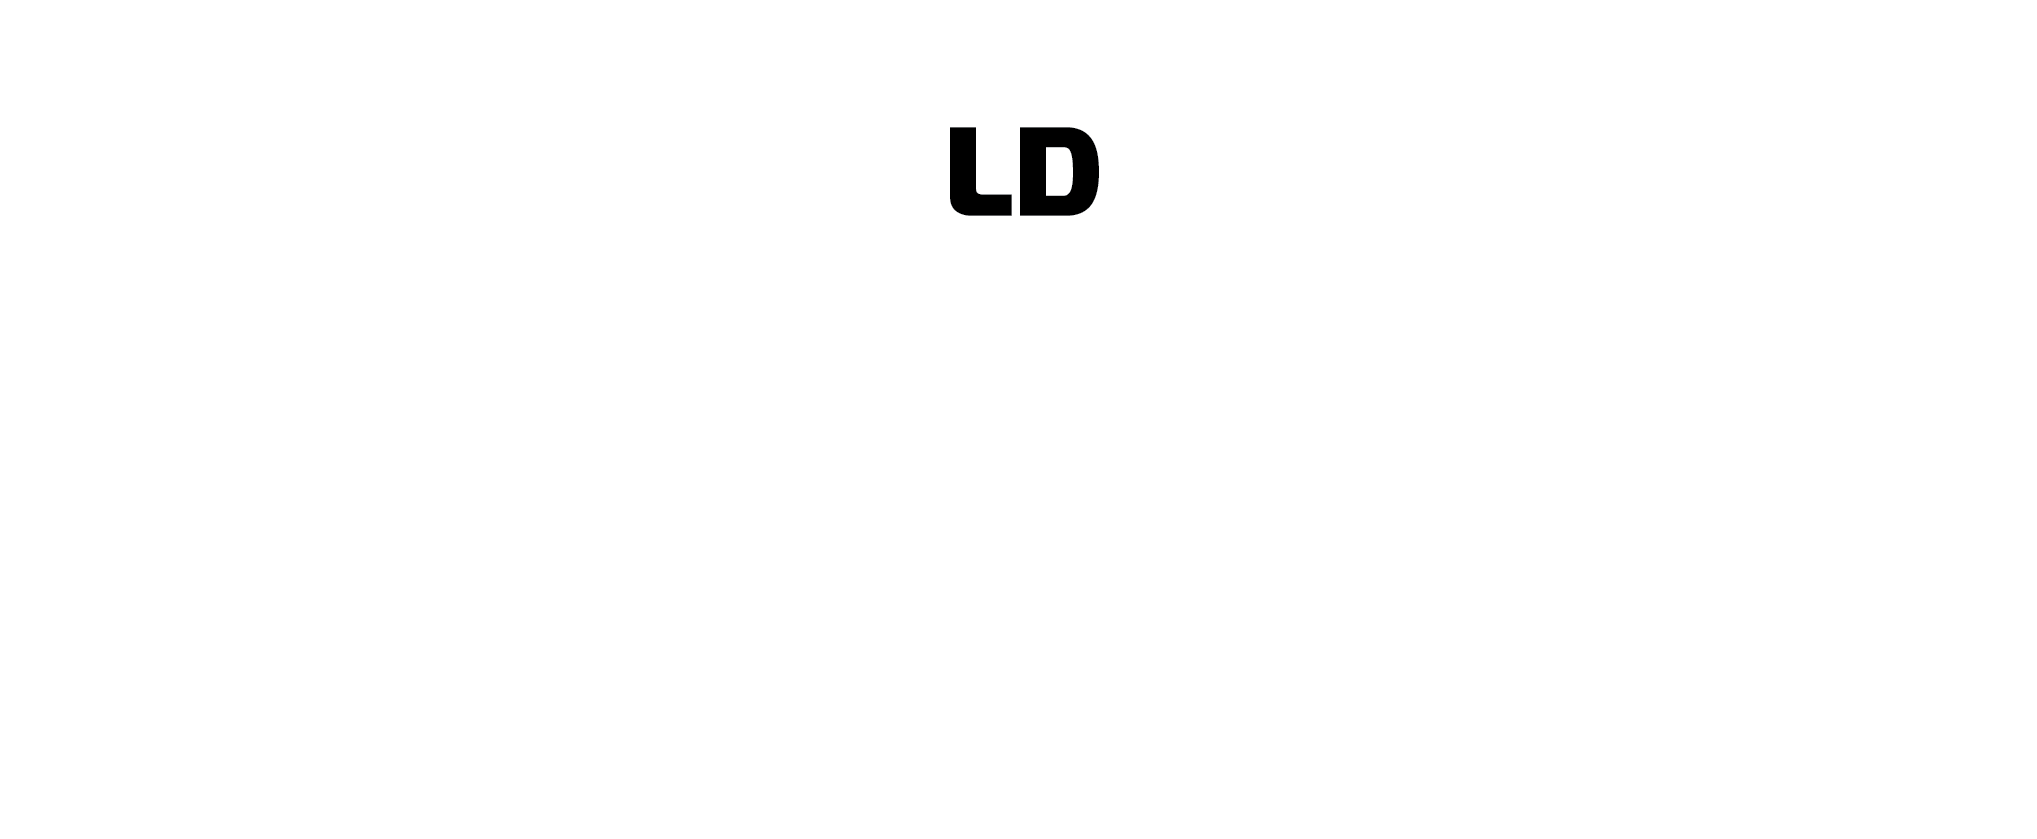 Lde Logo - LDEufonico Radio TV Network